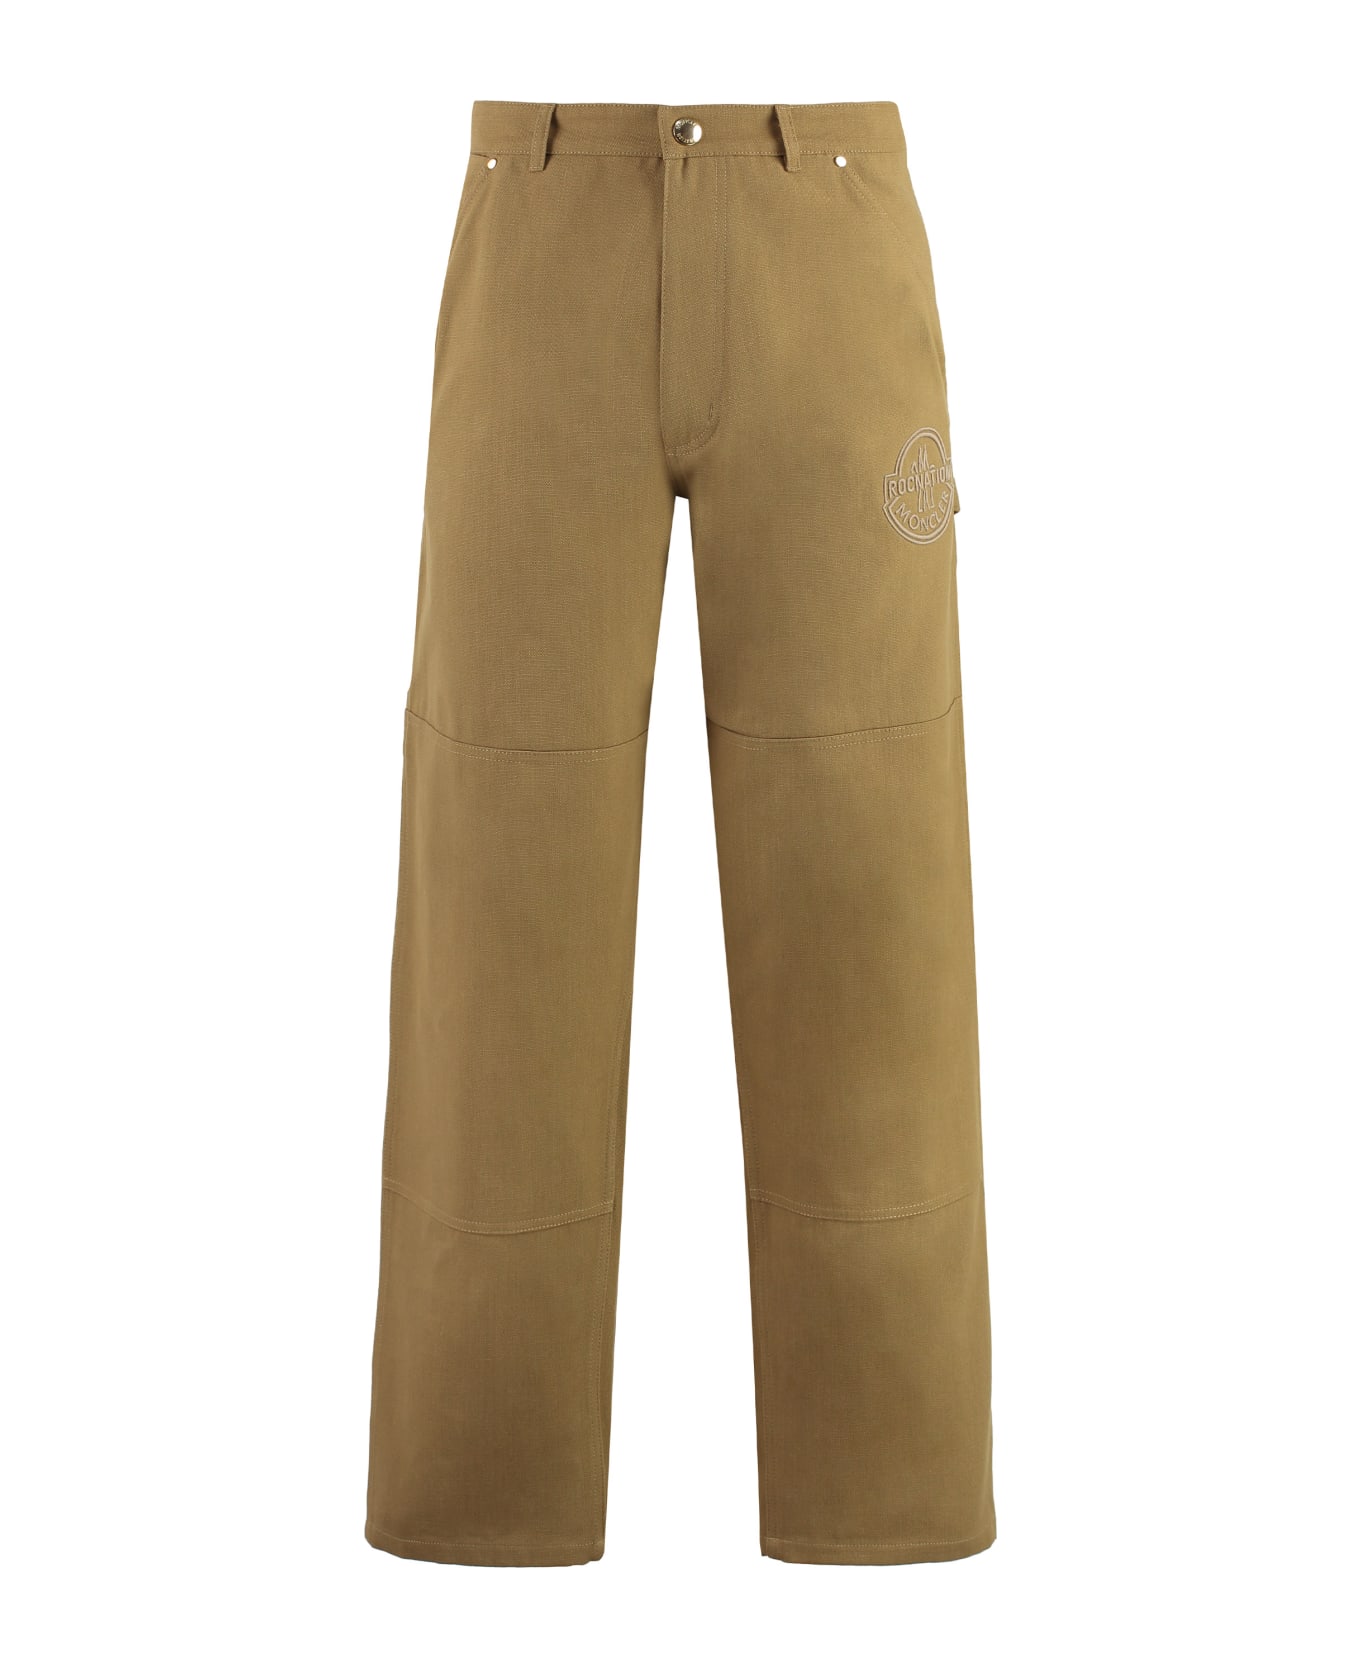 Moncler Genius Moncler X Roc Nation Designed By Jay-z - Cotton Cargo-trousers - BROWN